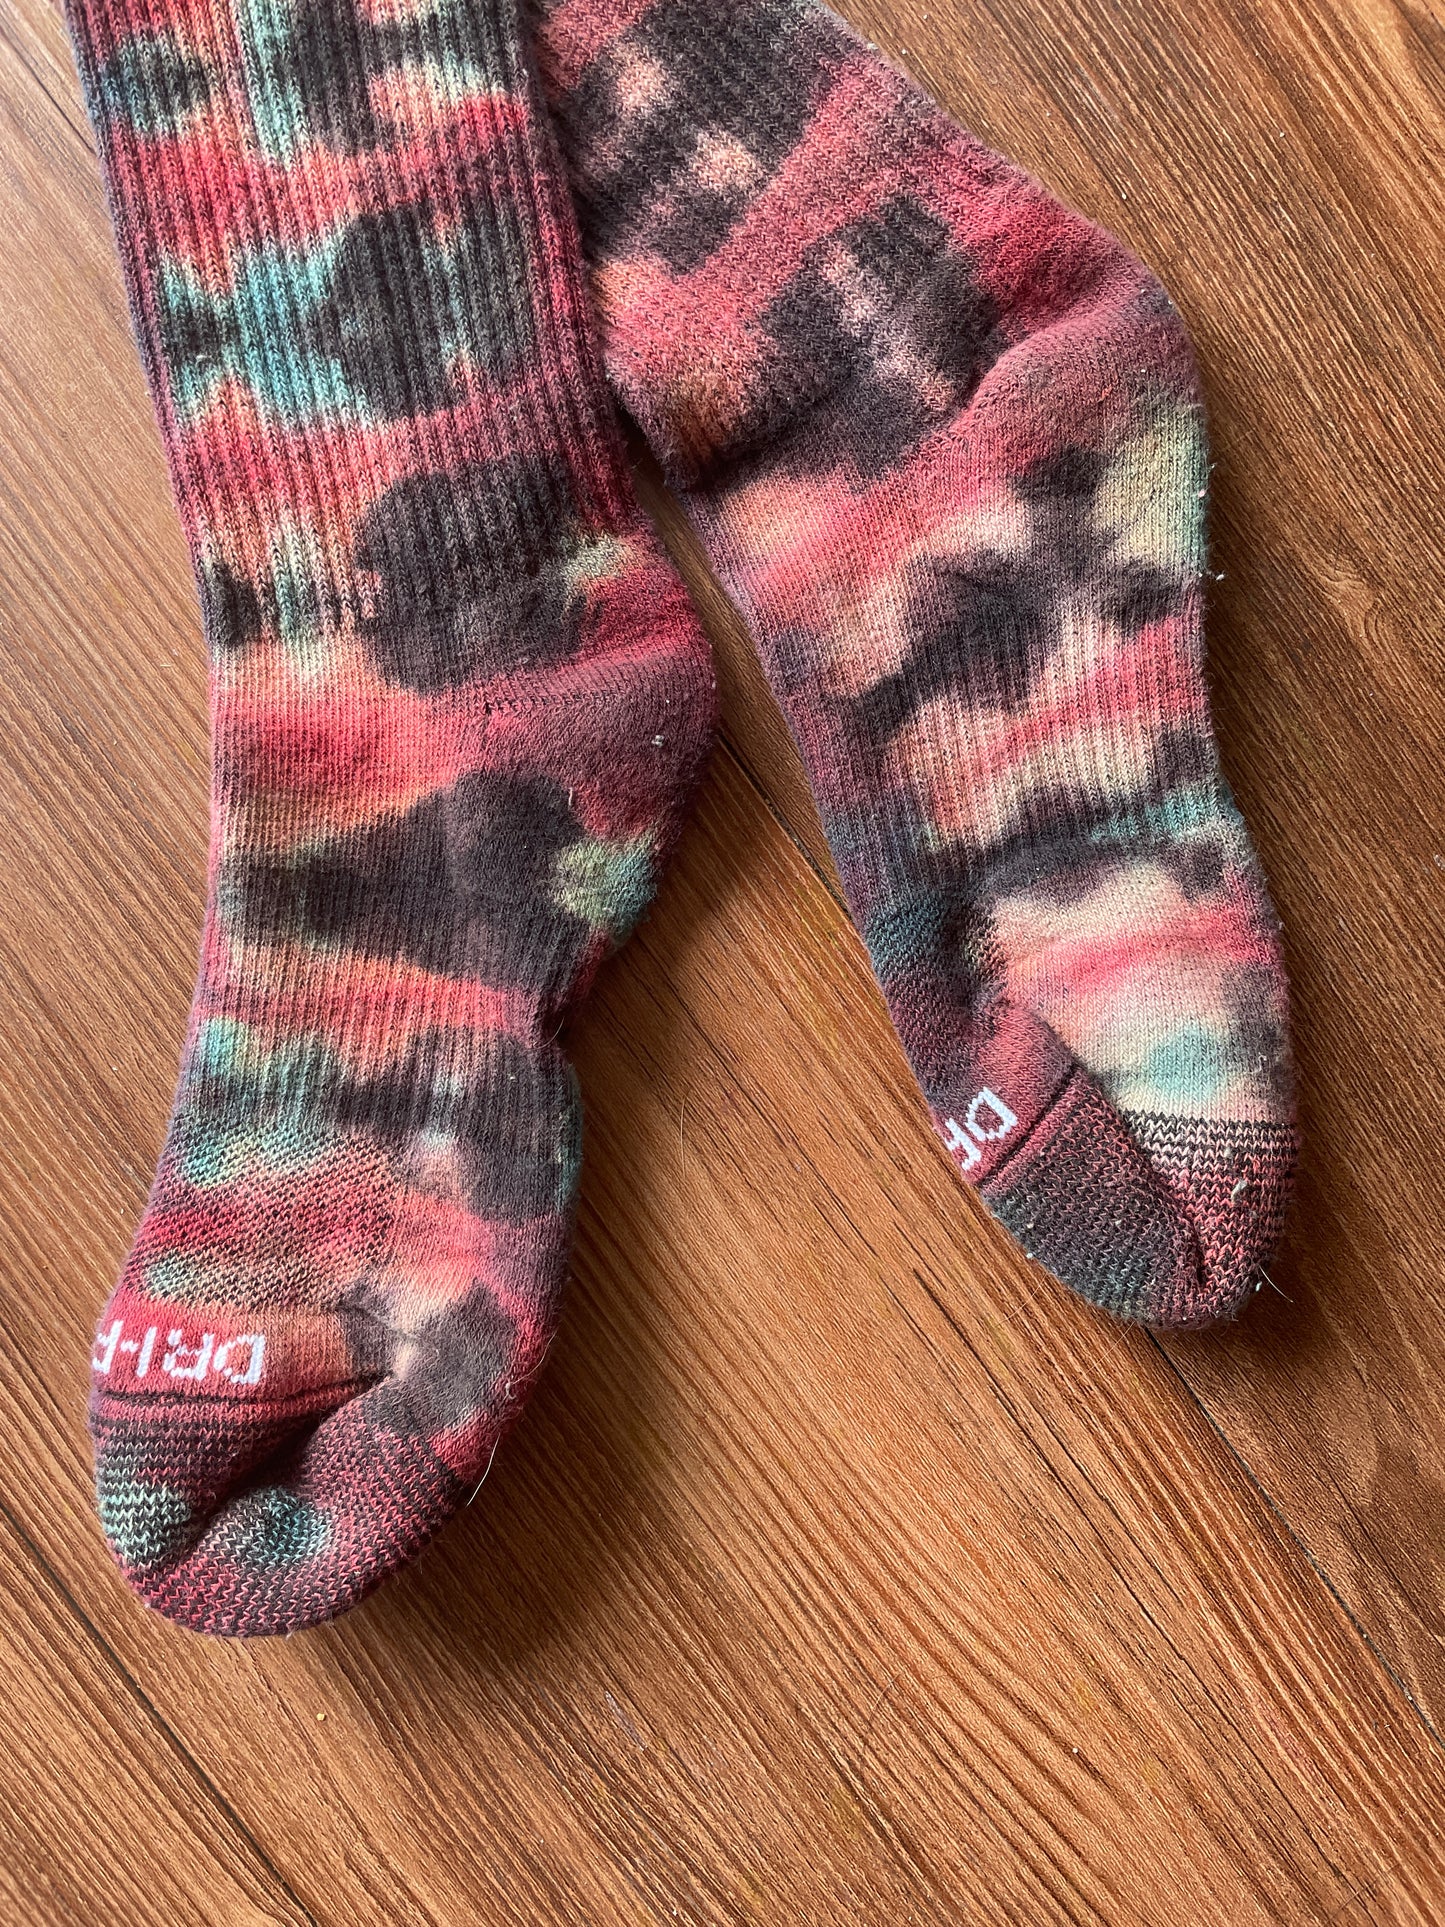 Red, Blue, and Black Reverse Tie Dye Nike Dri-FIT Training Socks - Size Medium (Men's 6-8/Women's 7-10)